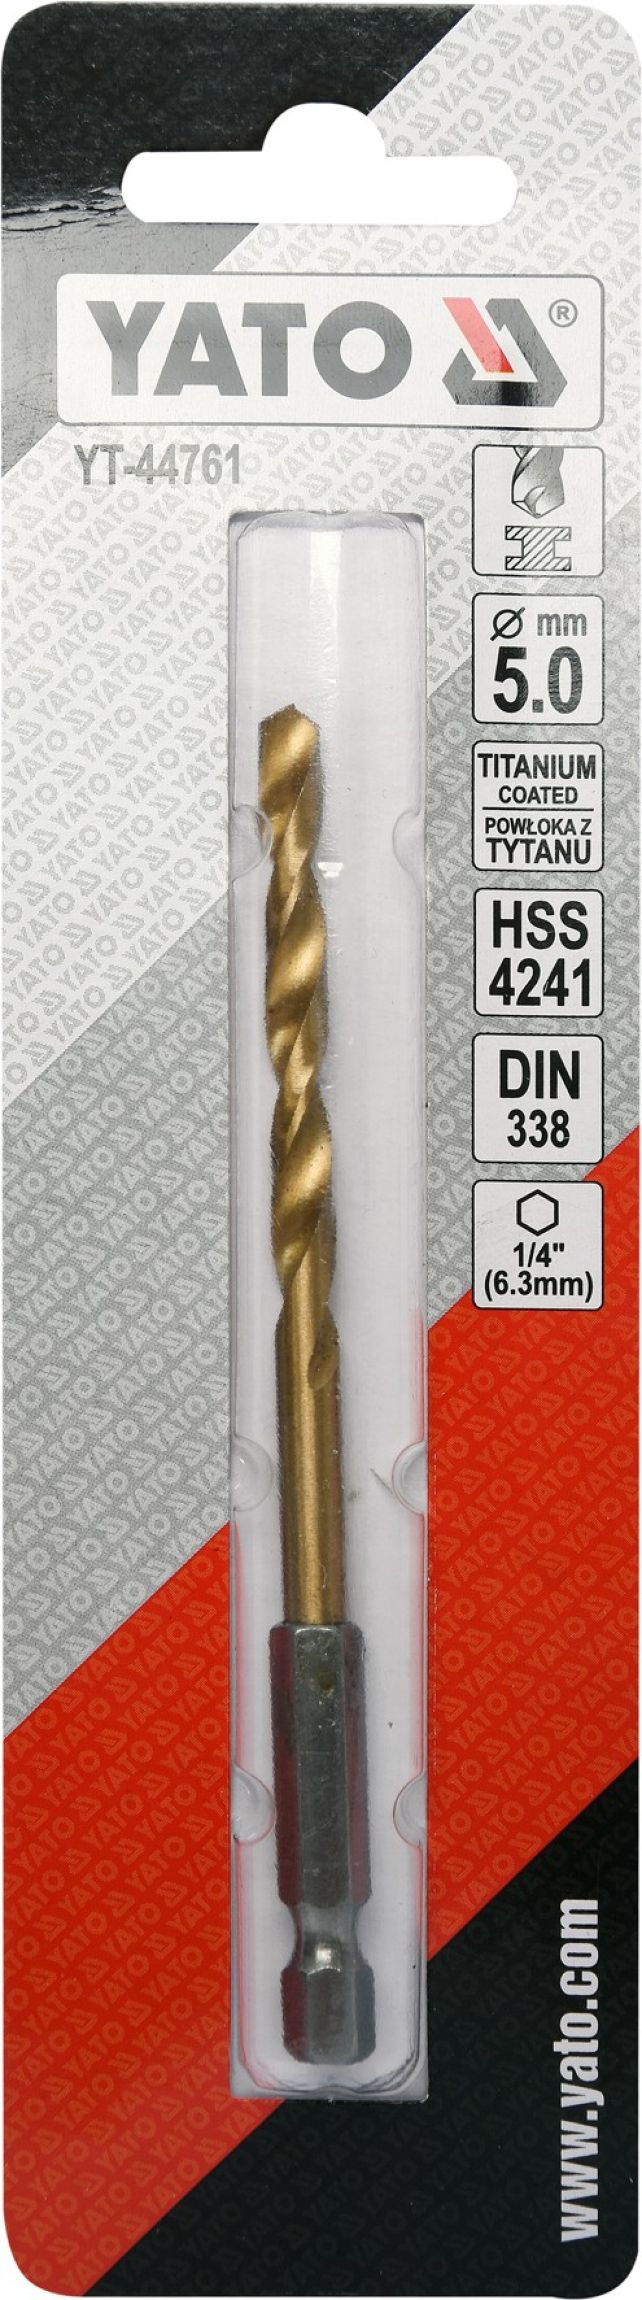 Vrtk do kovu HSS-titan 8,5mm se estihranou stopkou 1/4" Yato YT-44769